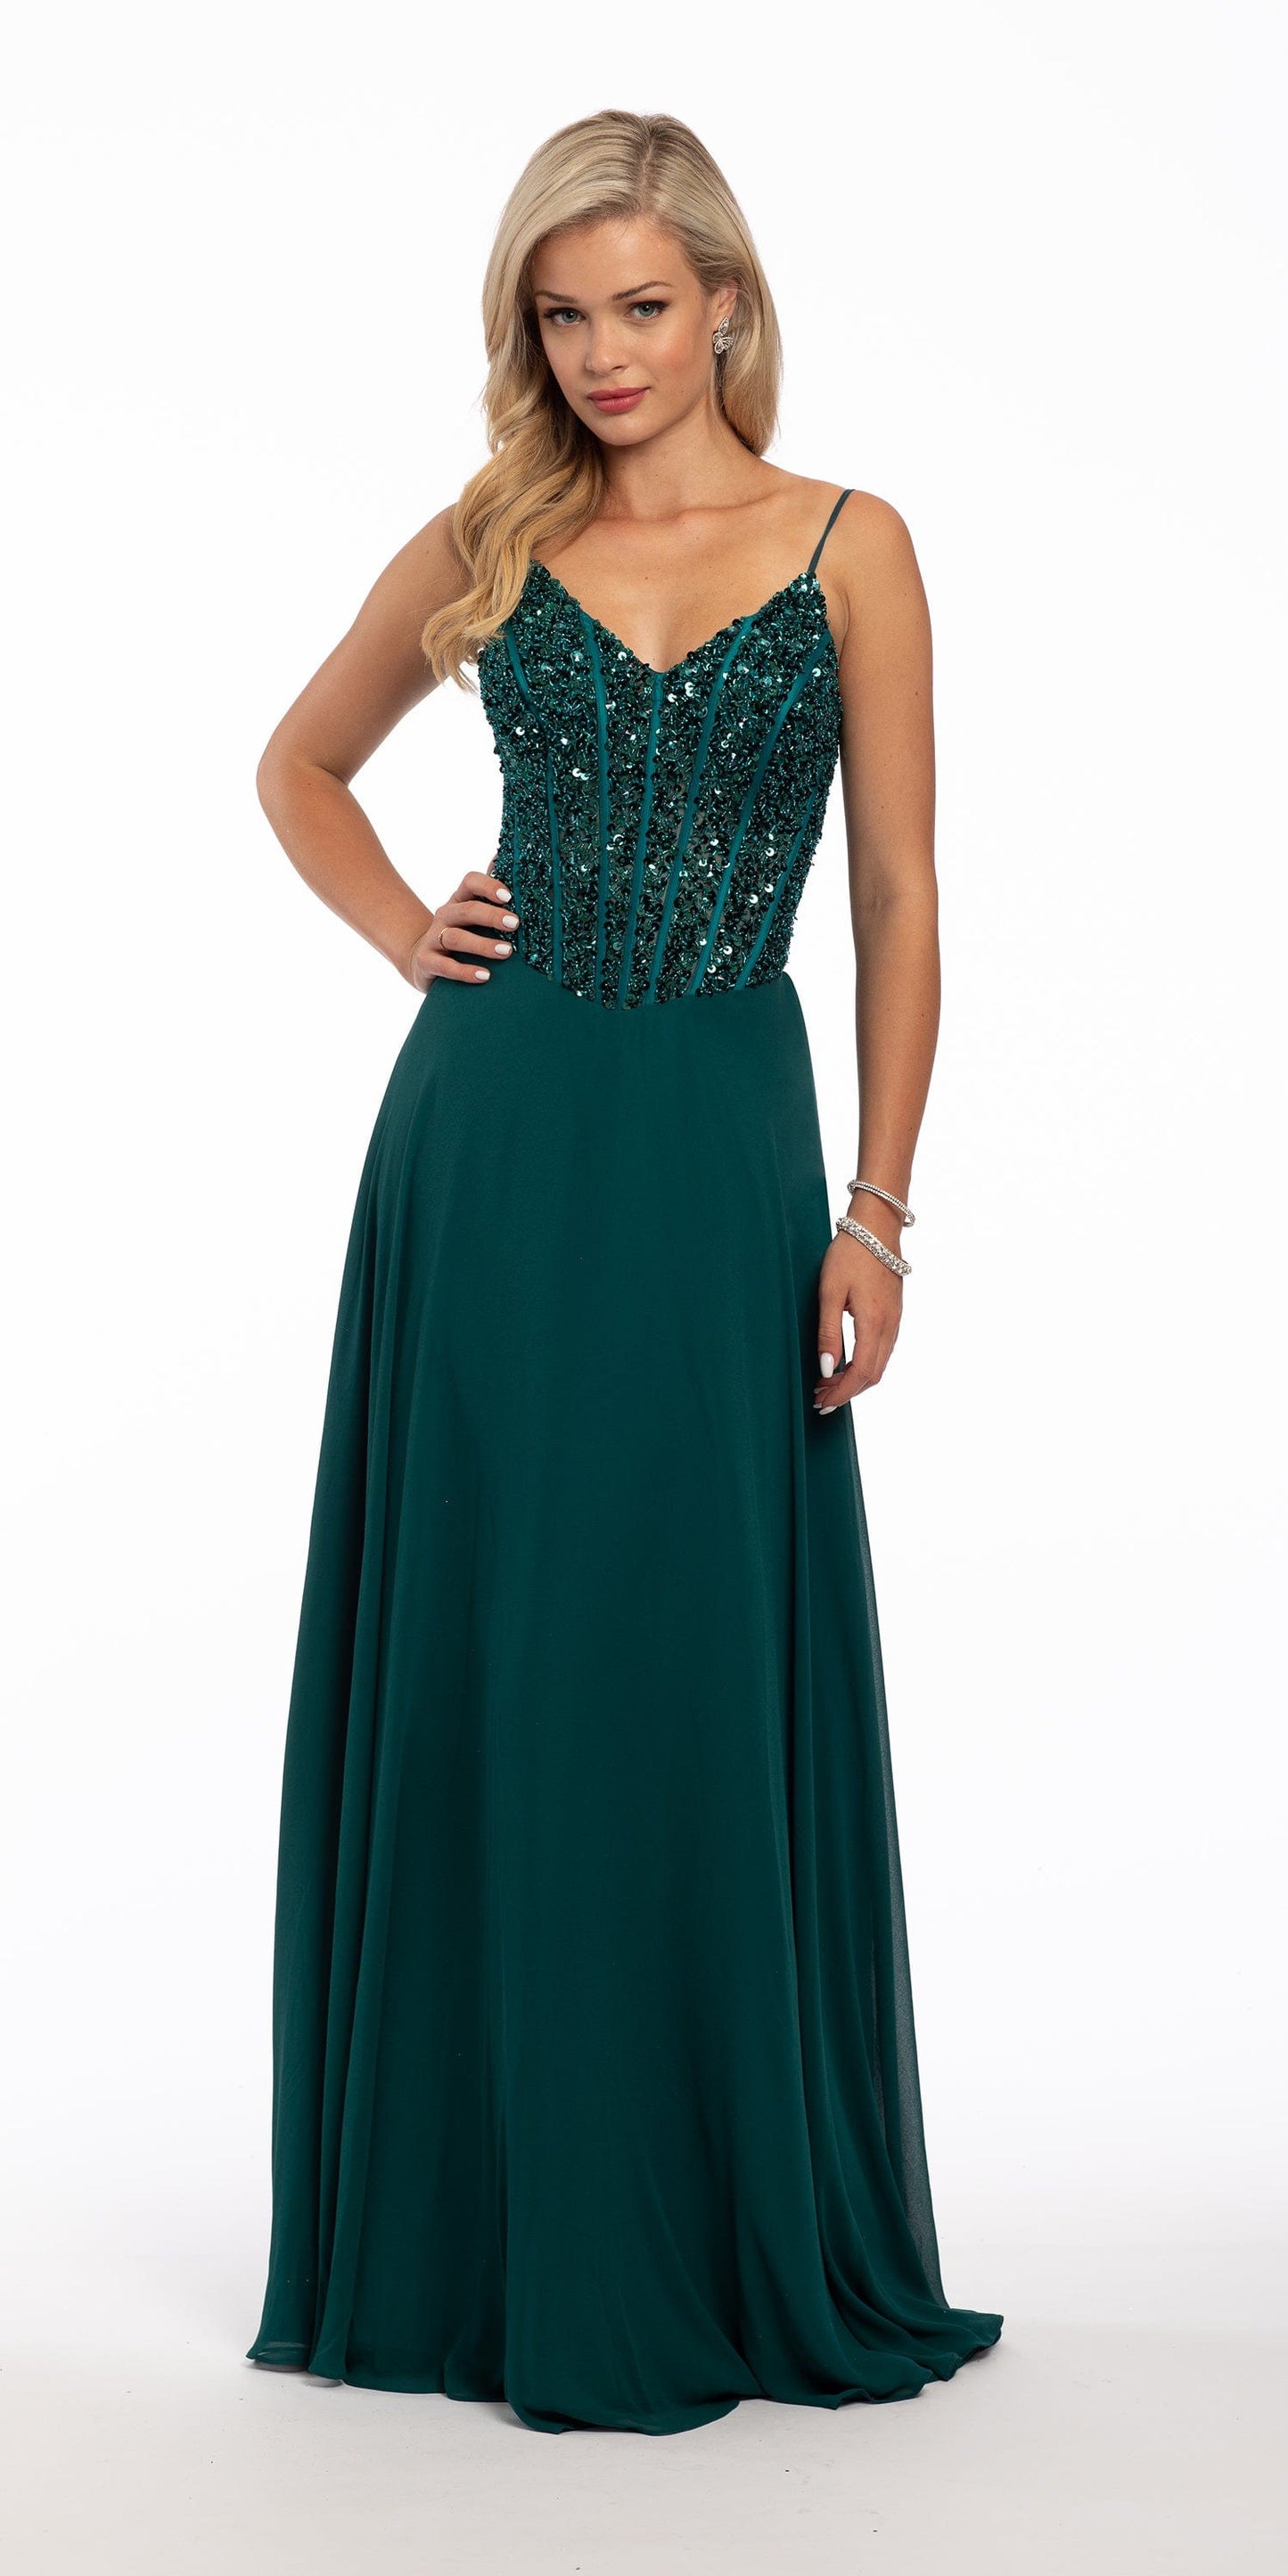 Camille La Vie Sequin Corset V Back Chiffon A Line Dress missy / 6 / emerald